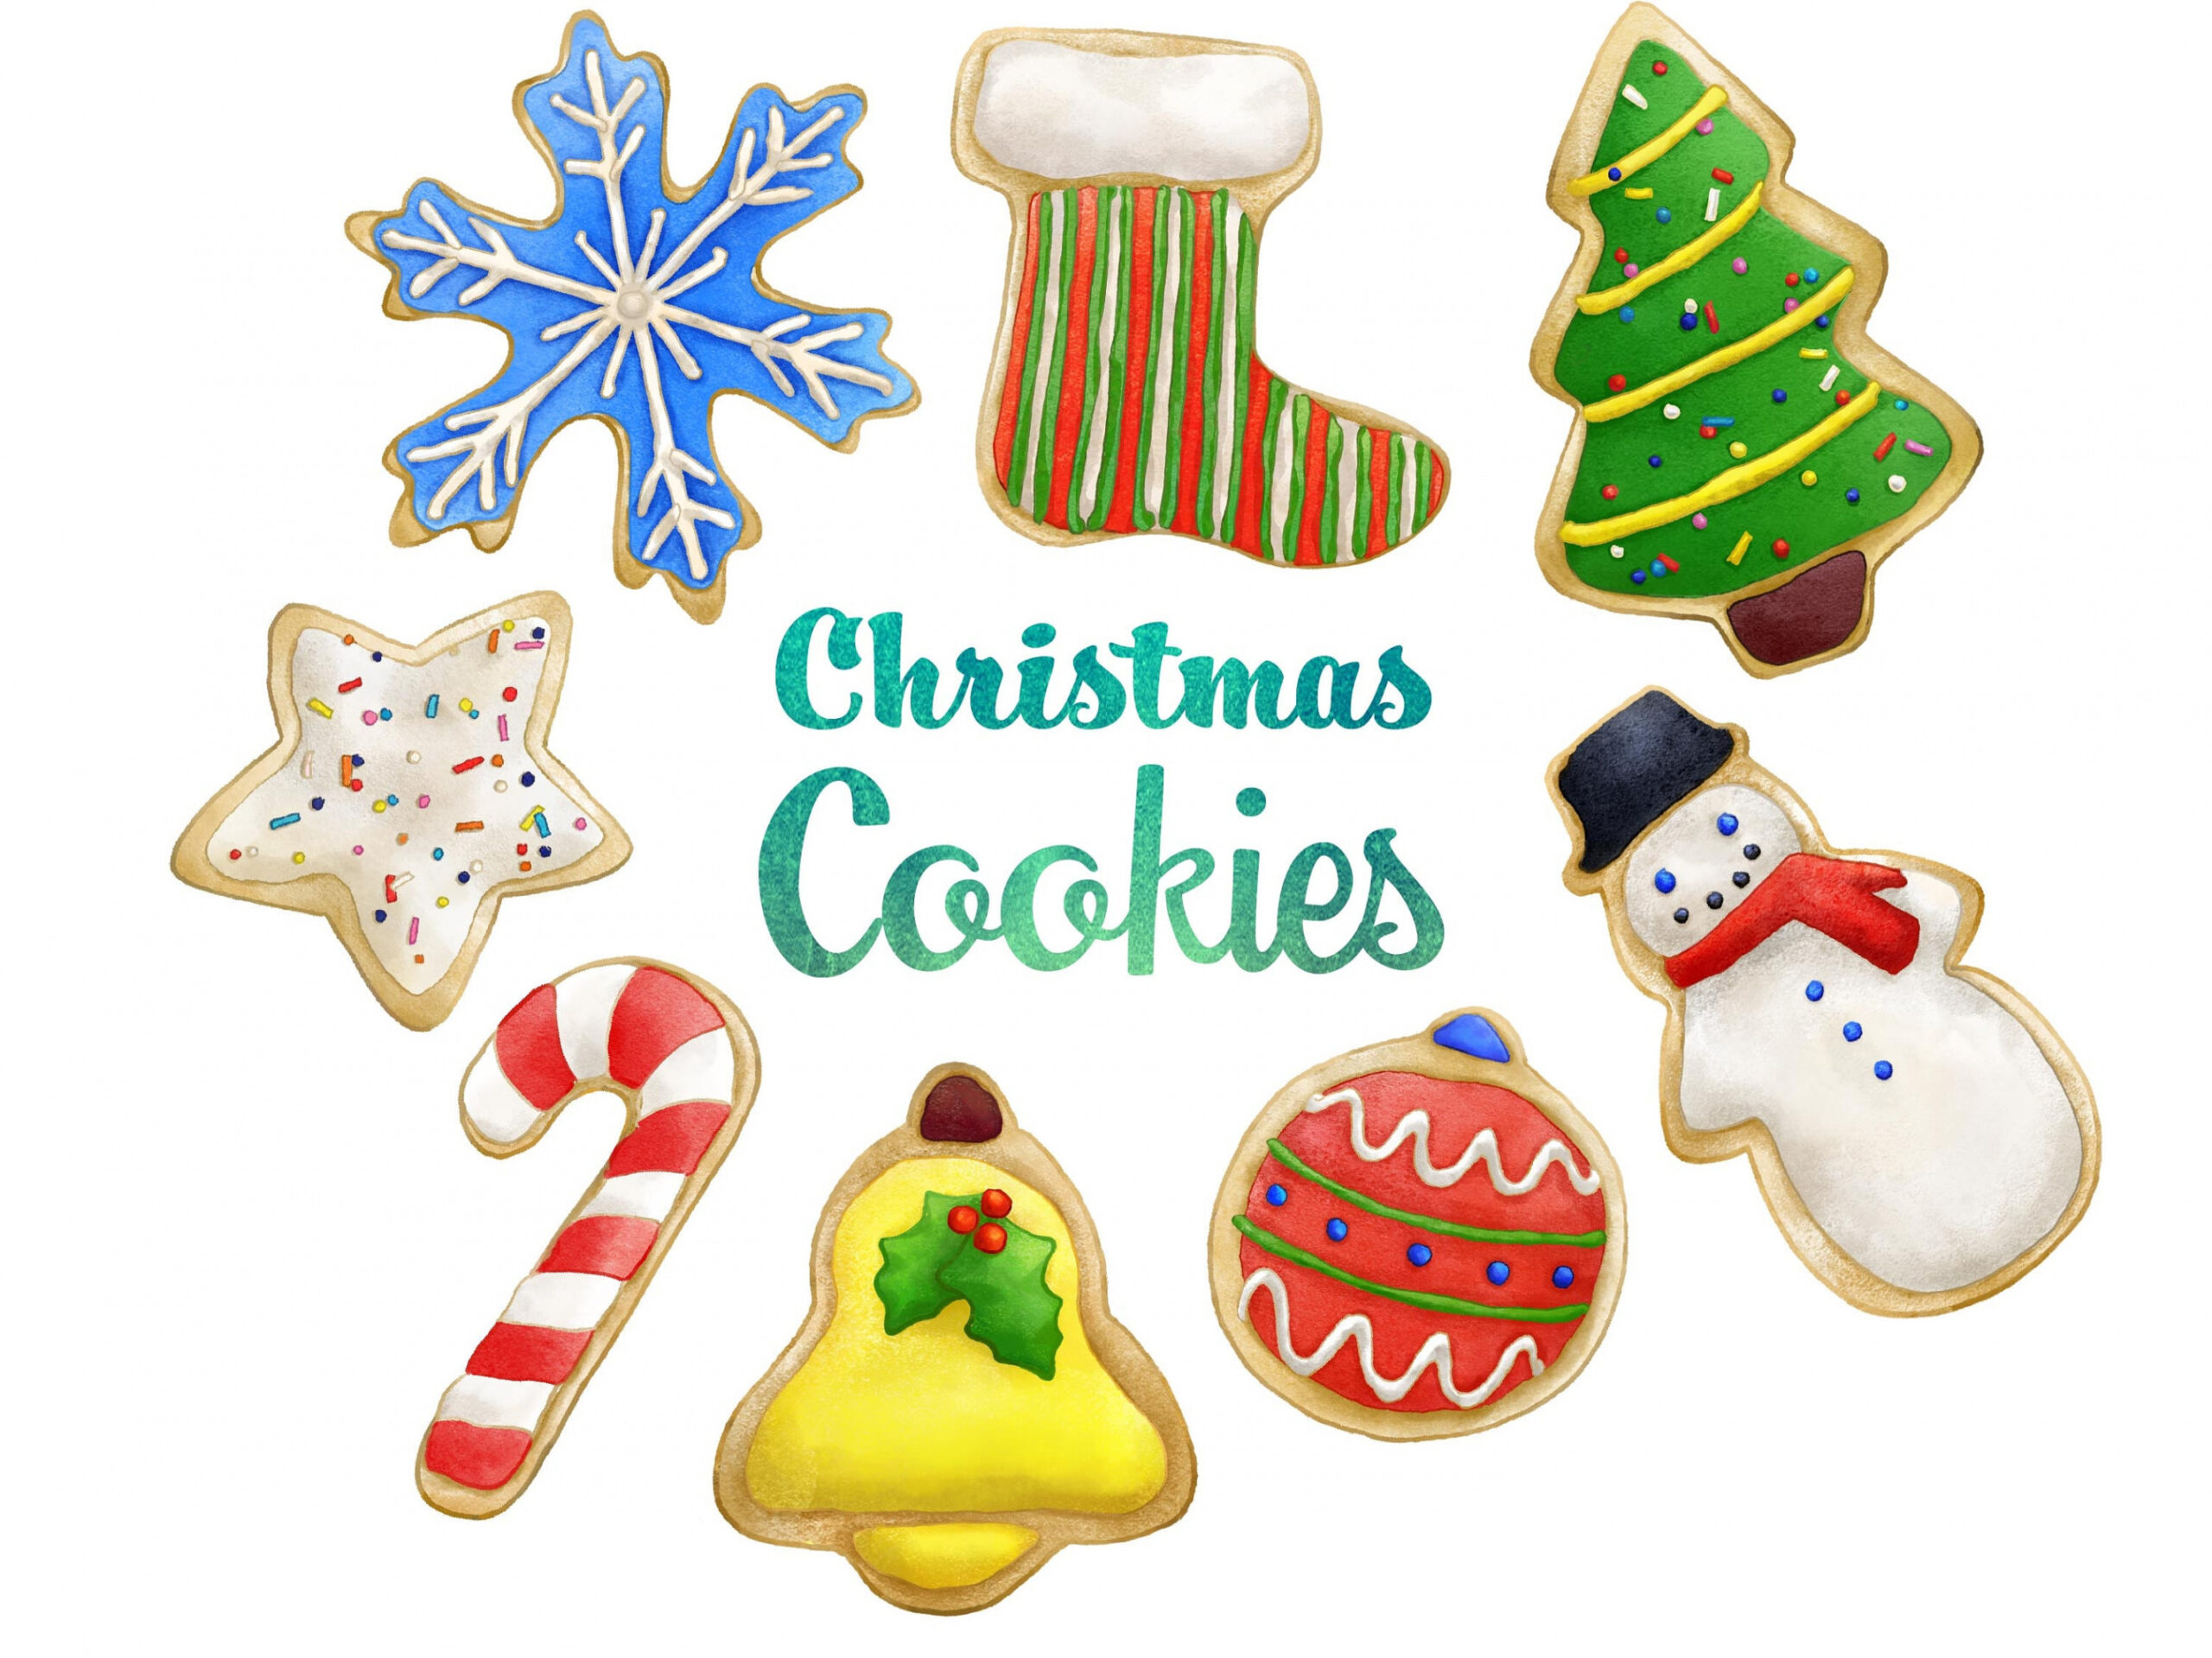 Christmas Cookies Clipart. Sofortiger digitaler Download